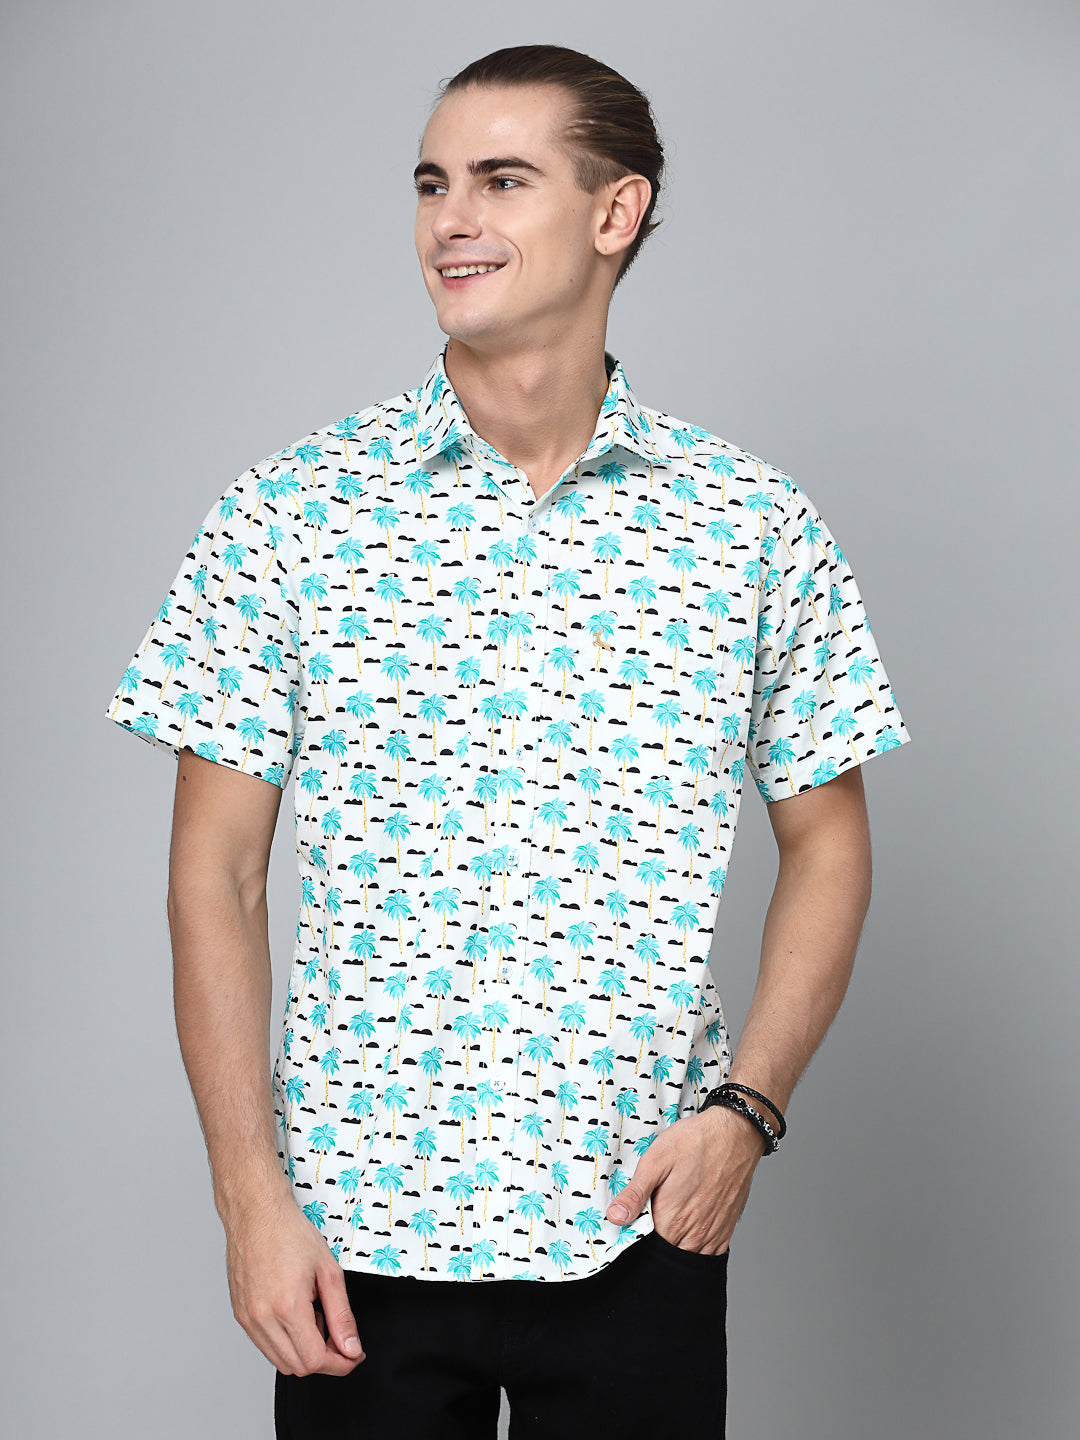 valbone-men-s-Palm-printed-giza-cotton-casual-shirt